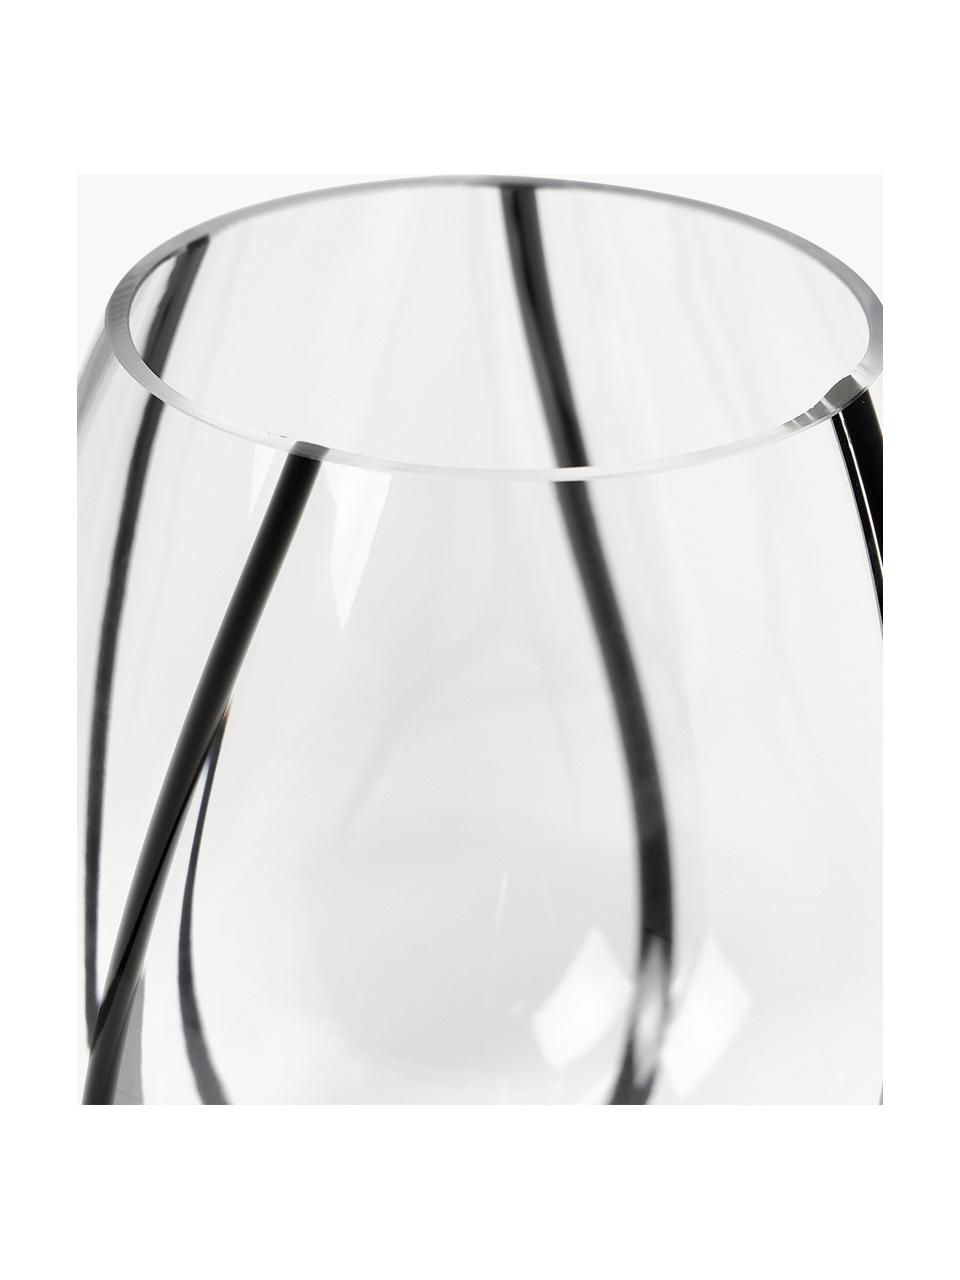 Jarrón de vidrio Kira, 18 cm, Vidrio sódico-cálcico, Transparente, negro, Ø 17 x Al 18 cm